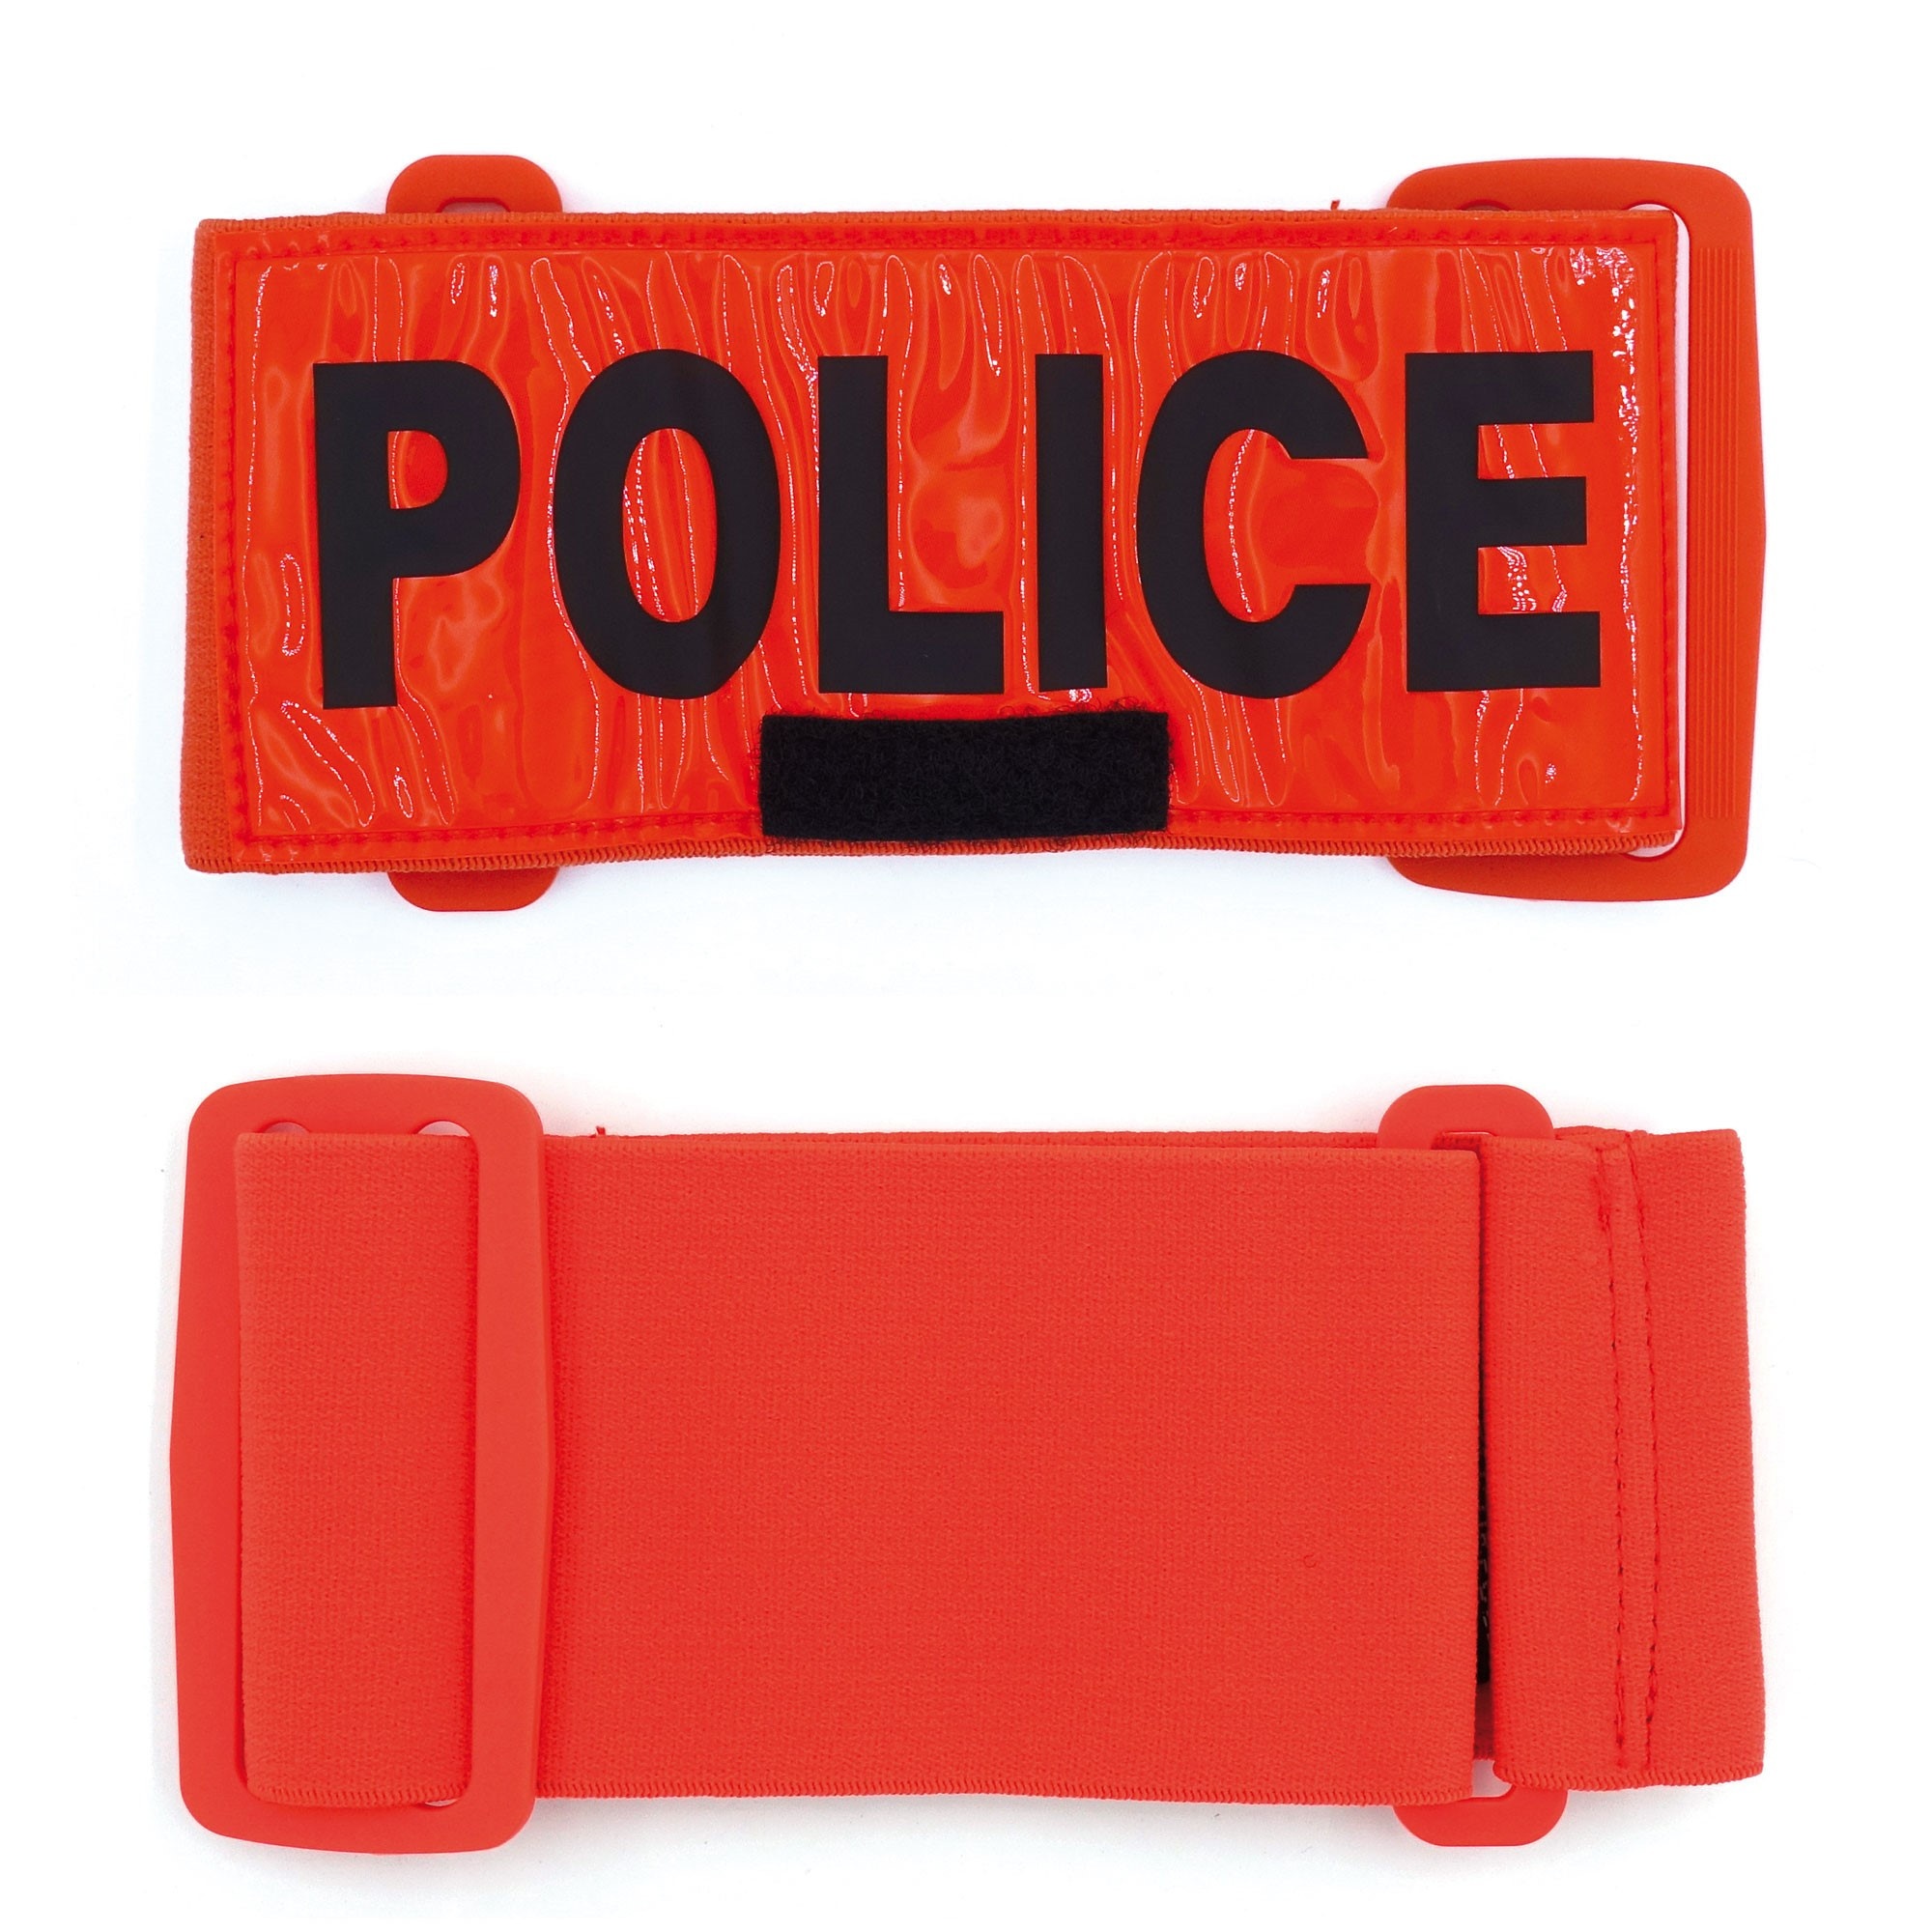 Brassard Police Haute Visibilité Orange Velcro